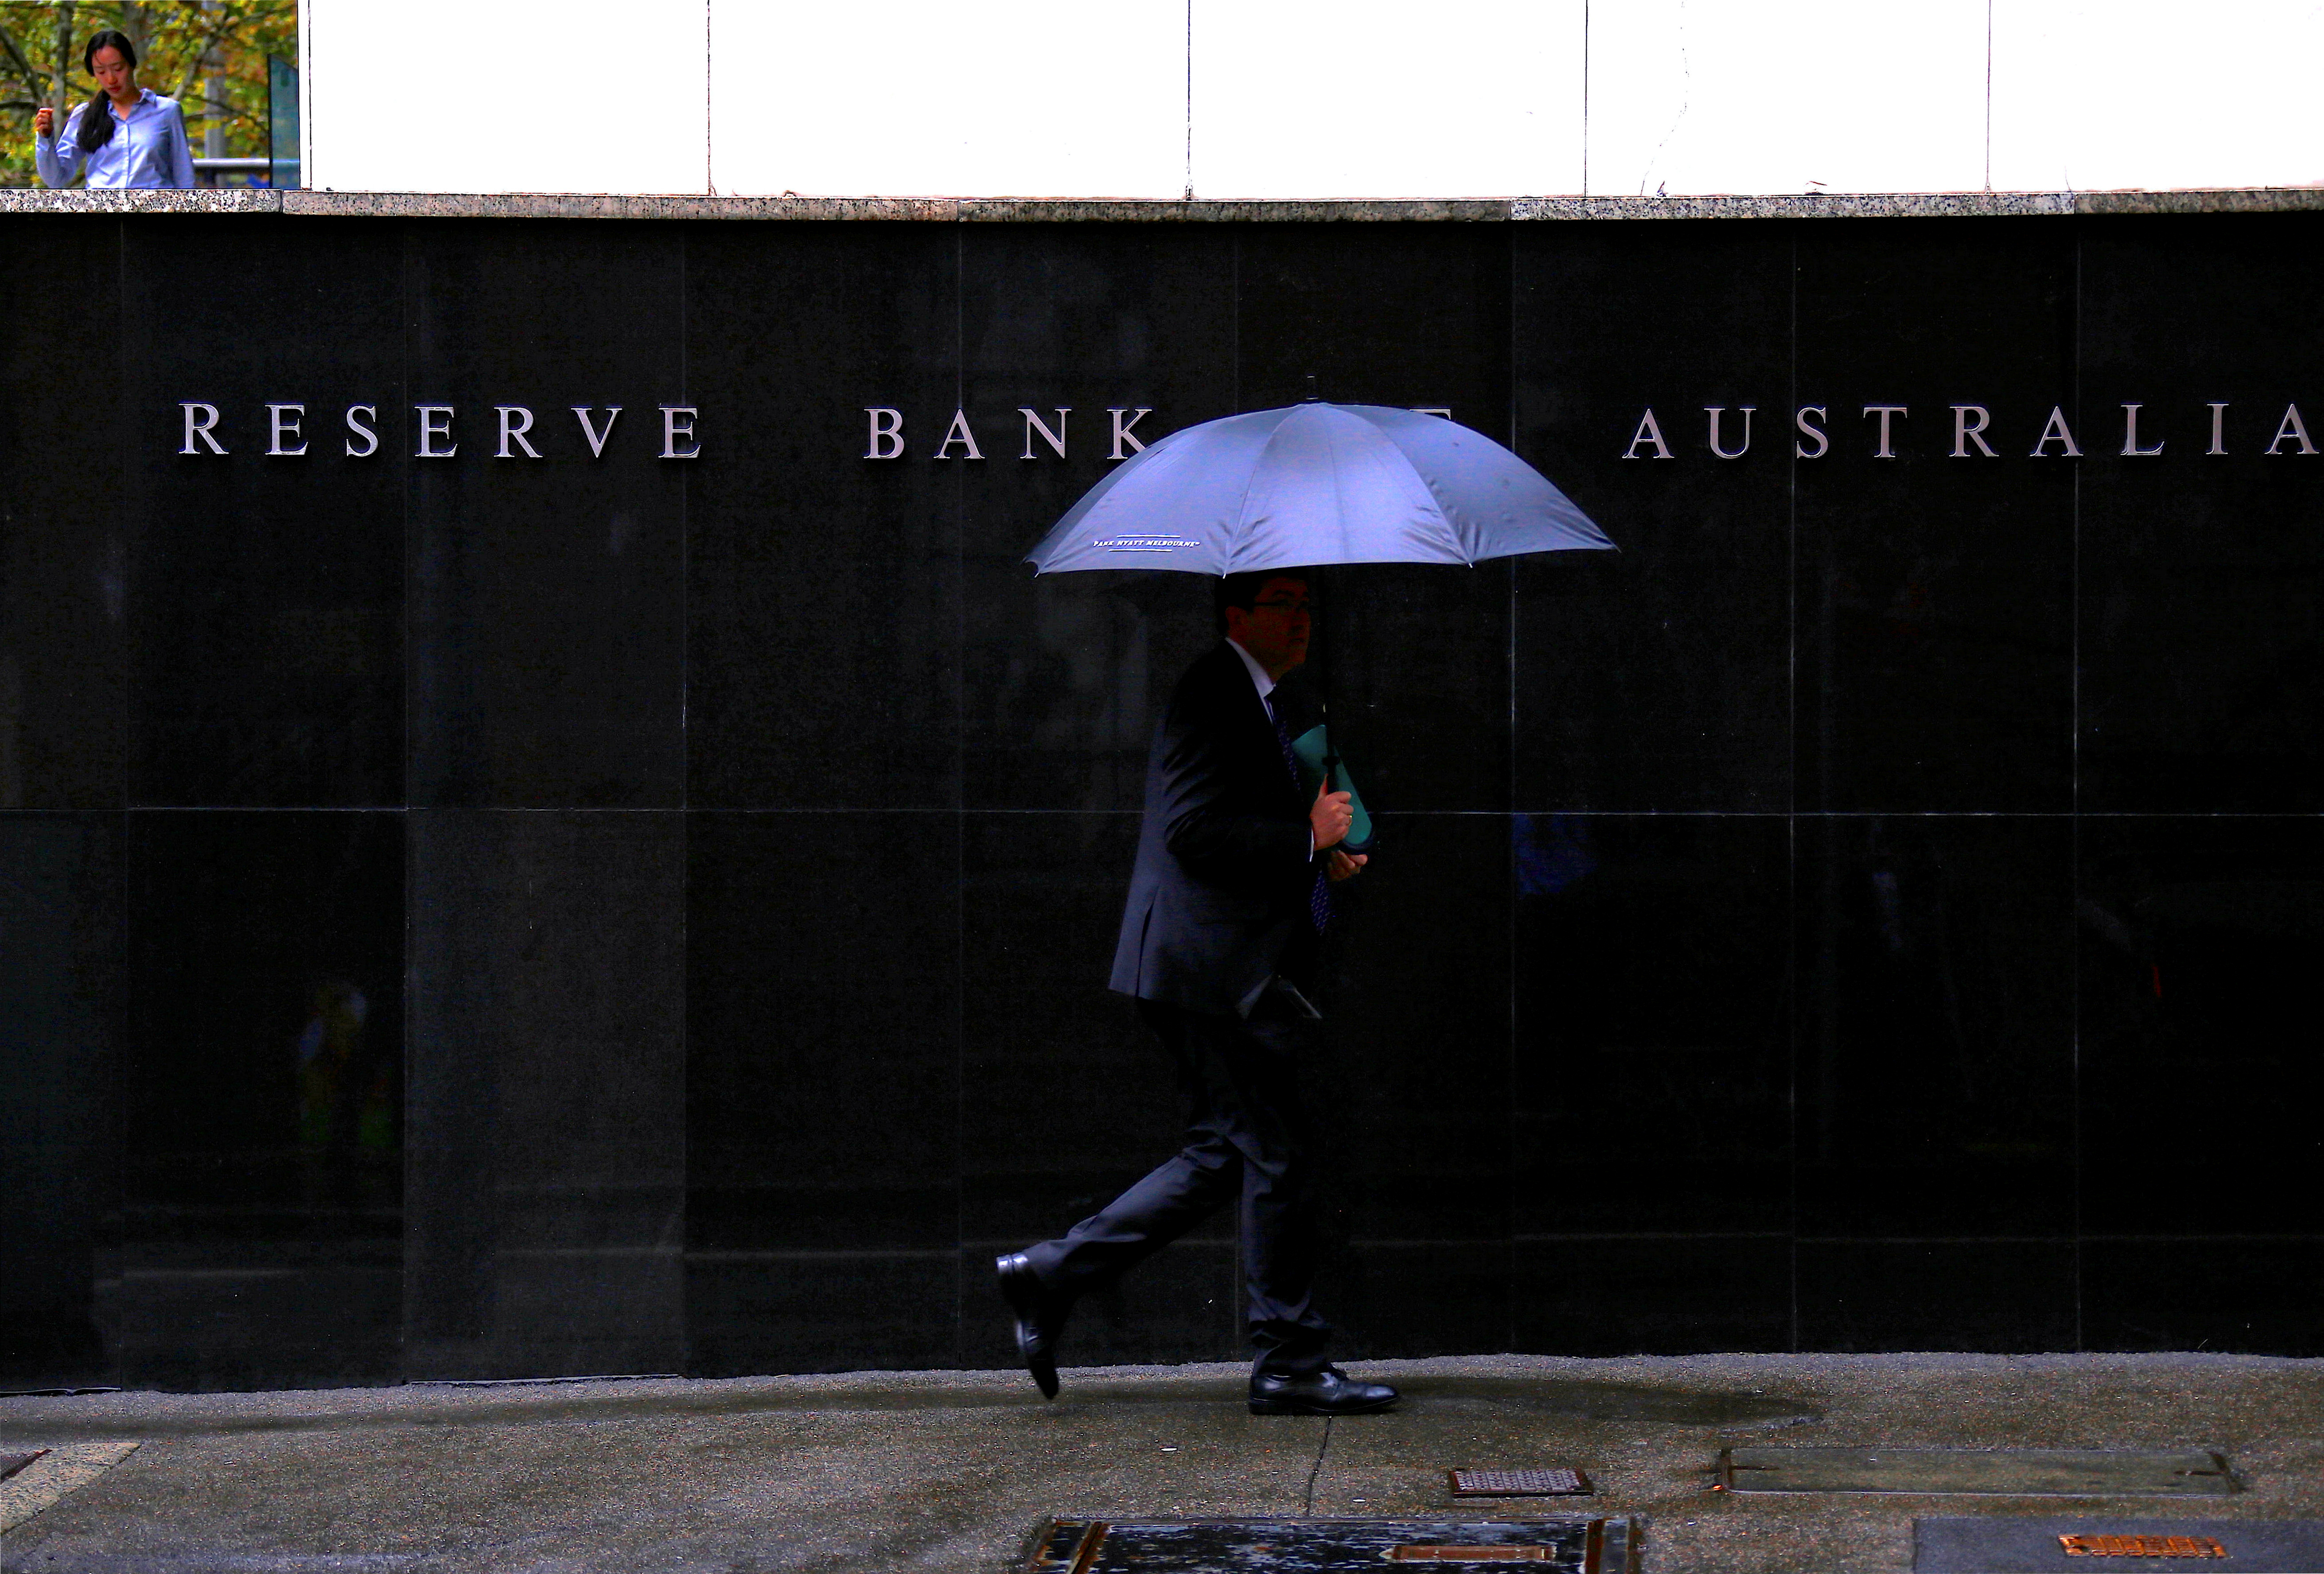 Pedestrians walk past the Reserve Bank of Australia building in central Sydney, Australia